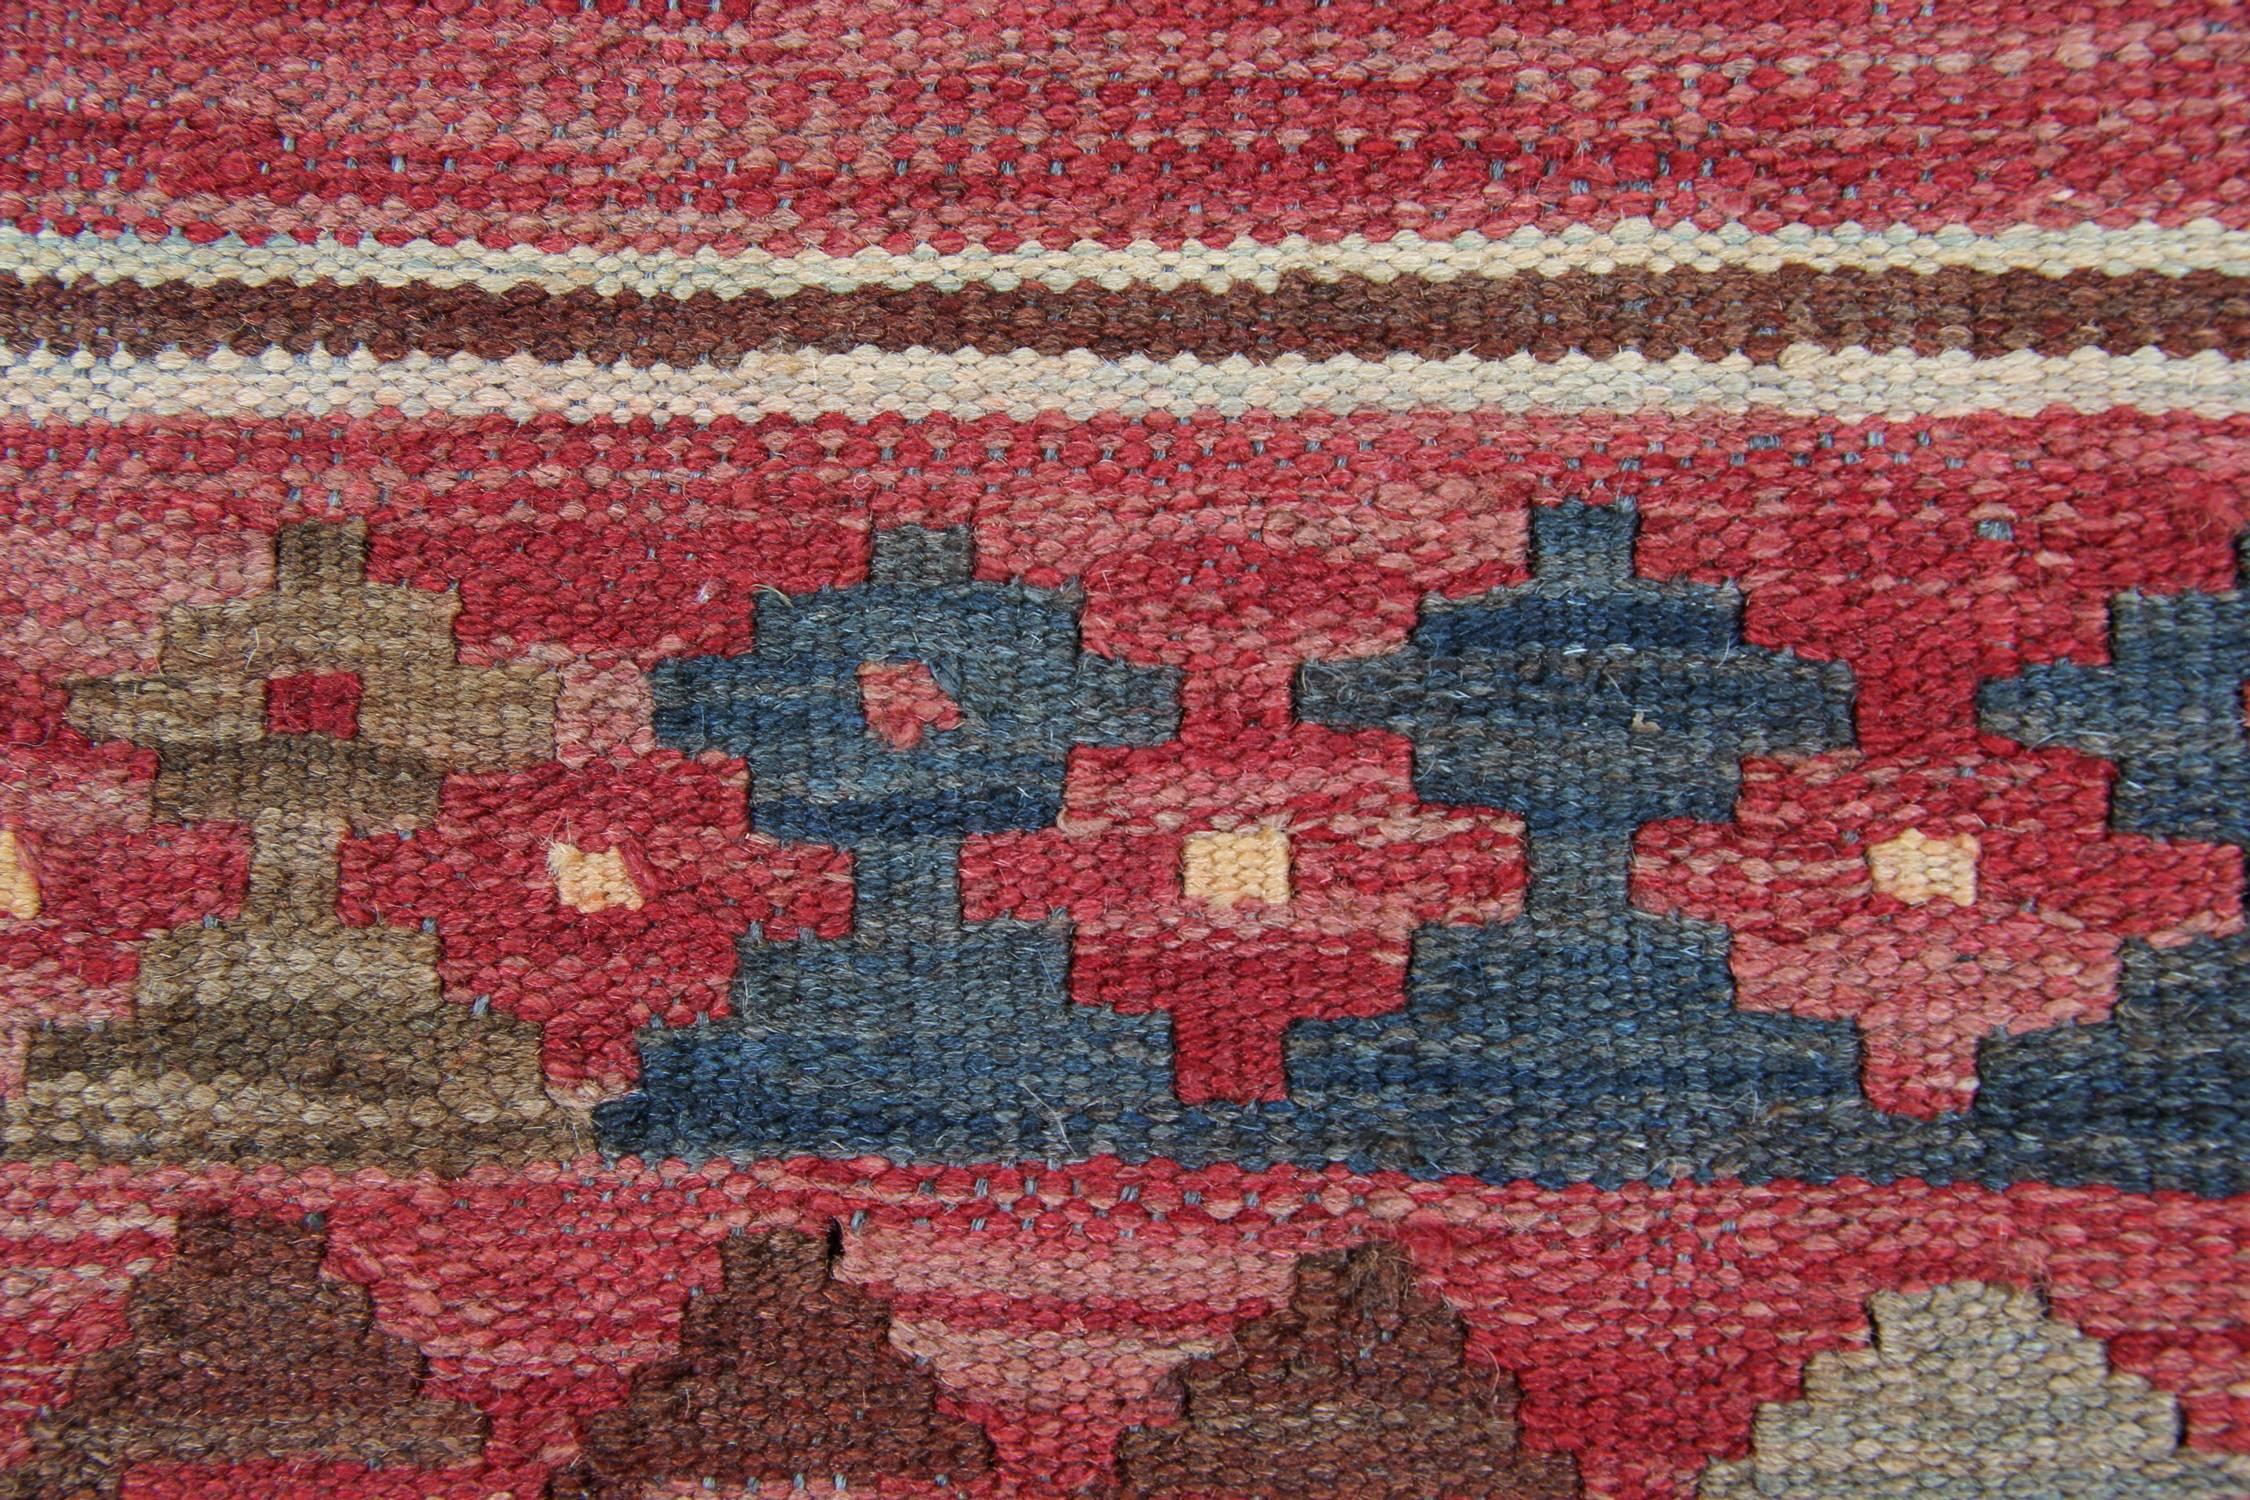 Woven Afghan Kilim Rug with Geometric Design